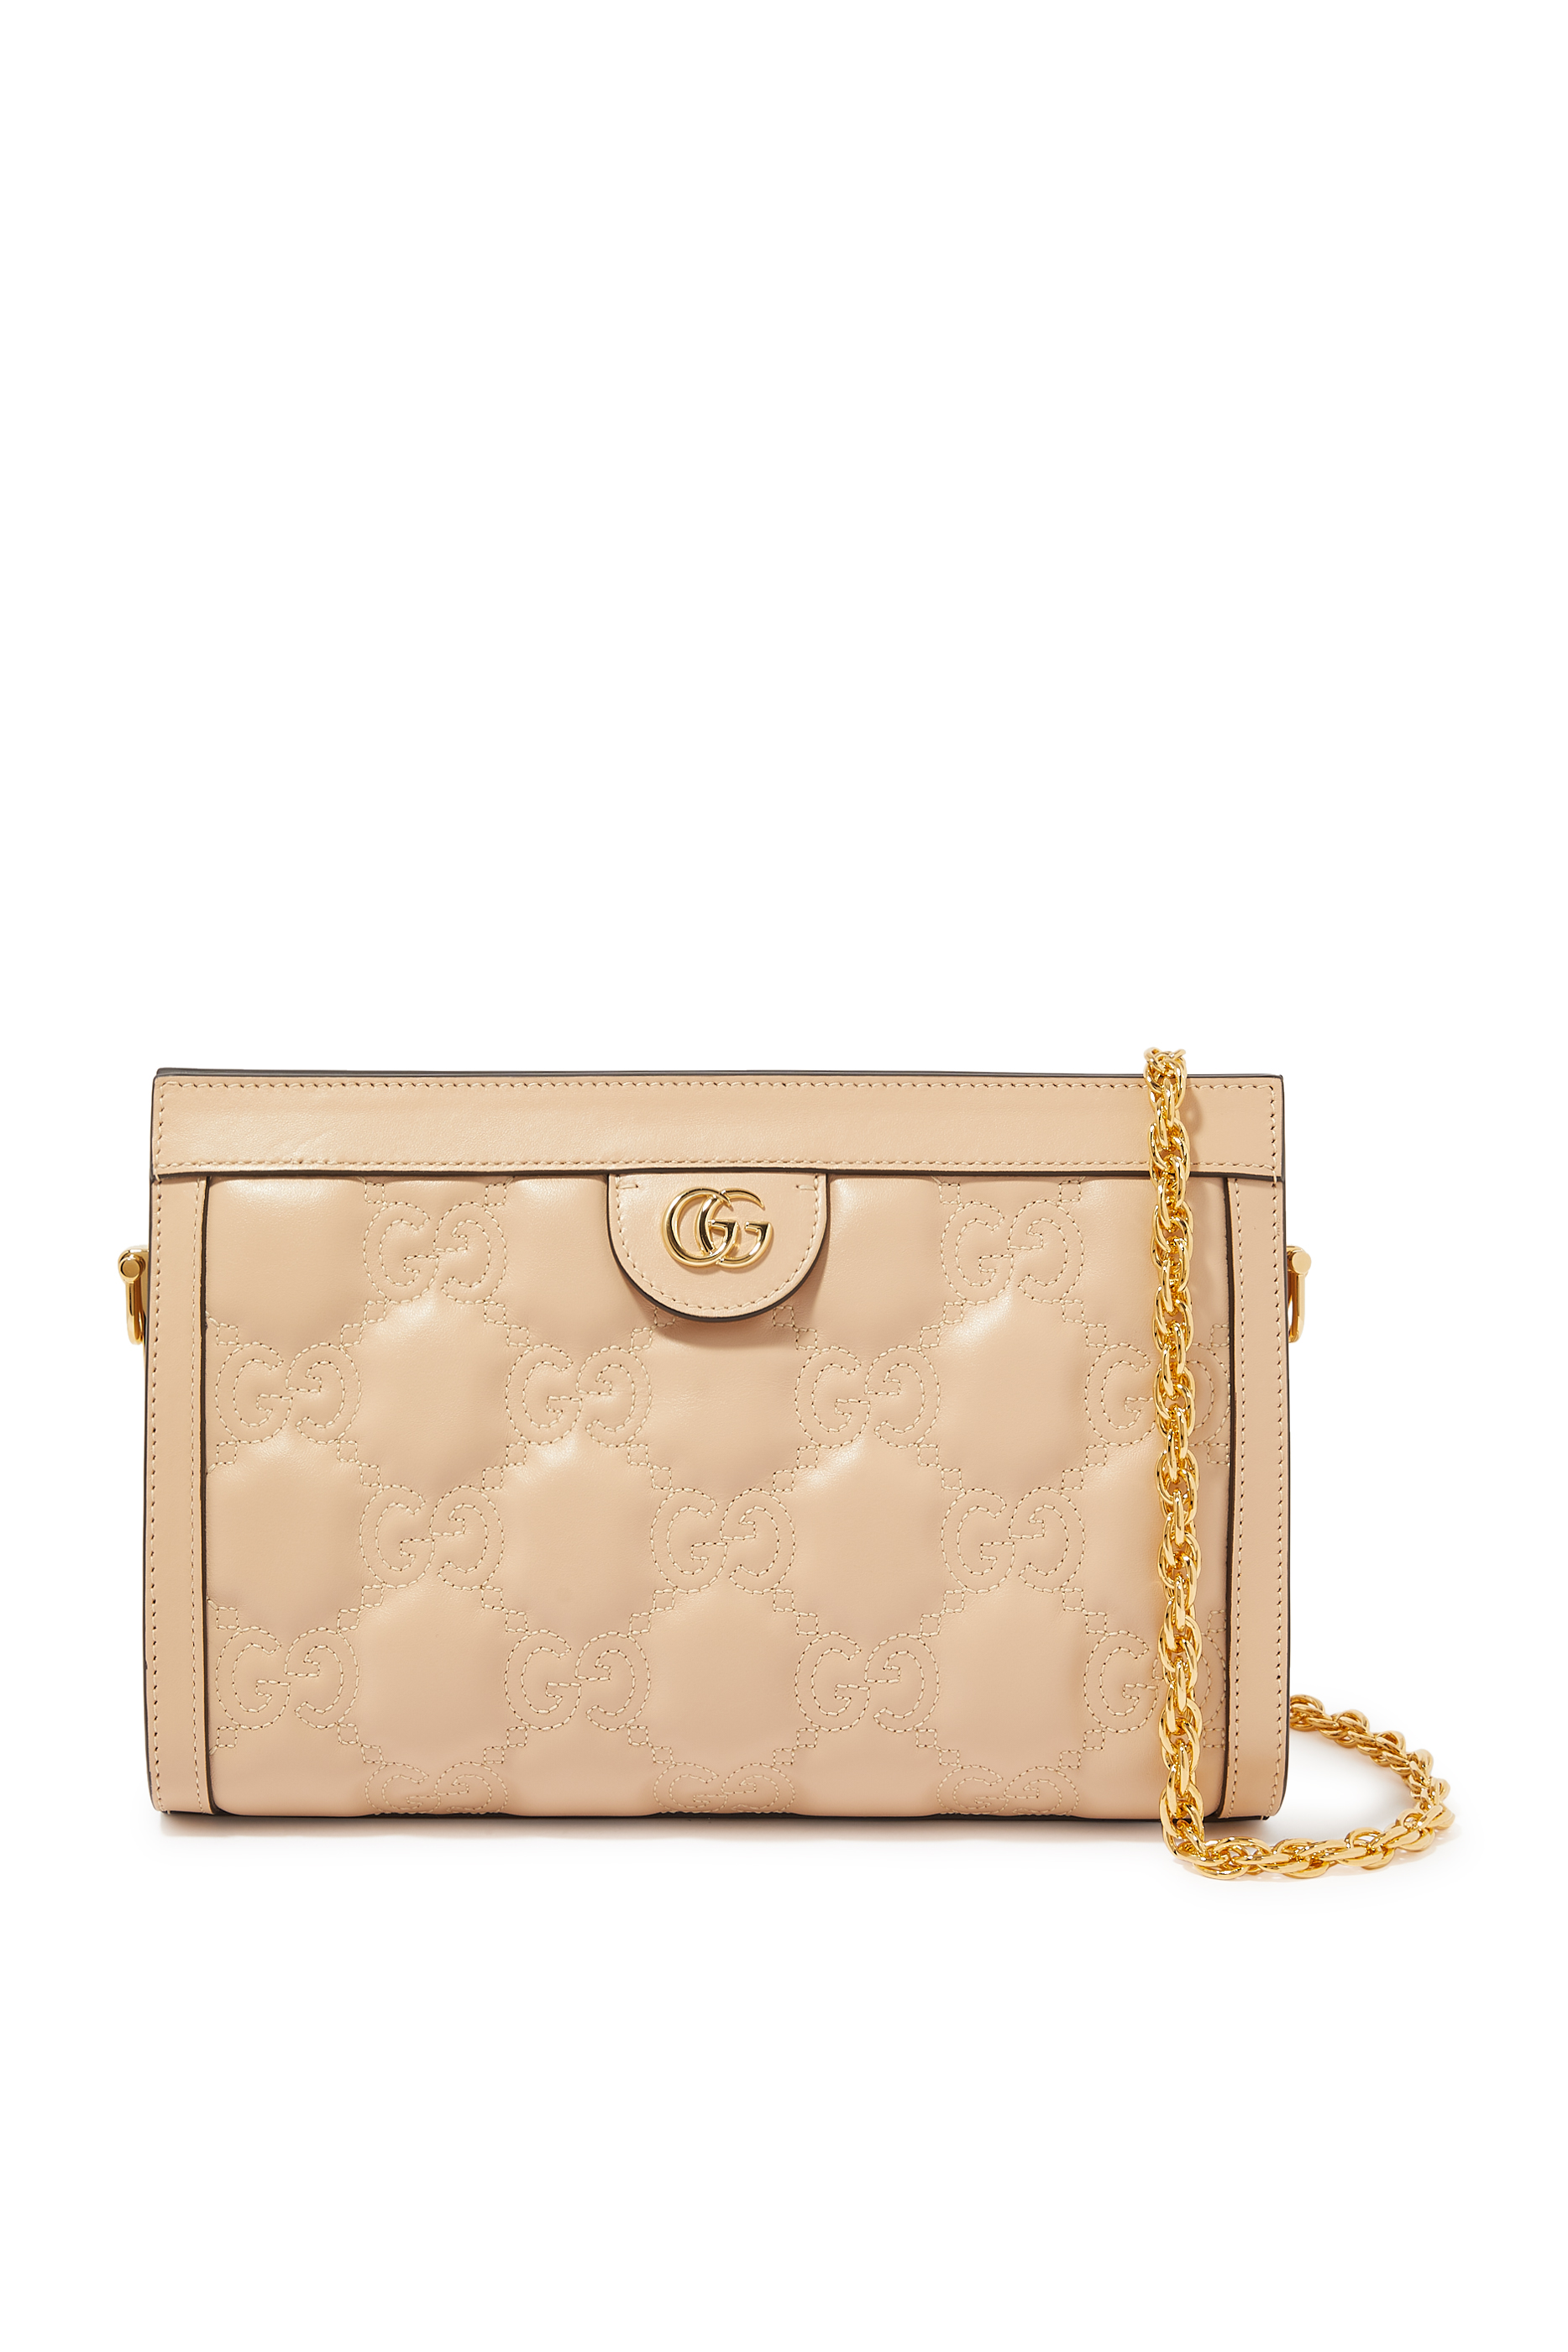 Buy Gucci GG Matelasse Leather Shoulder Bag for Womens | Bloomingdale's UAE